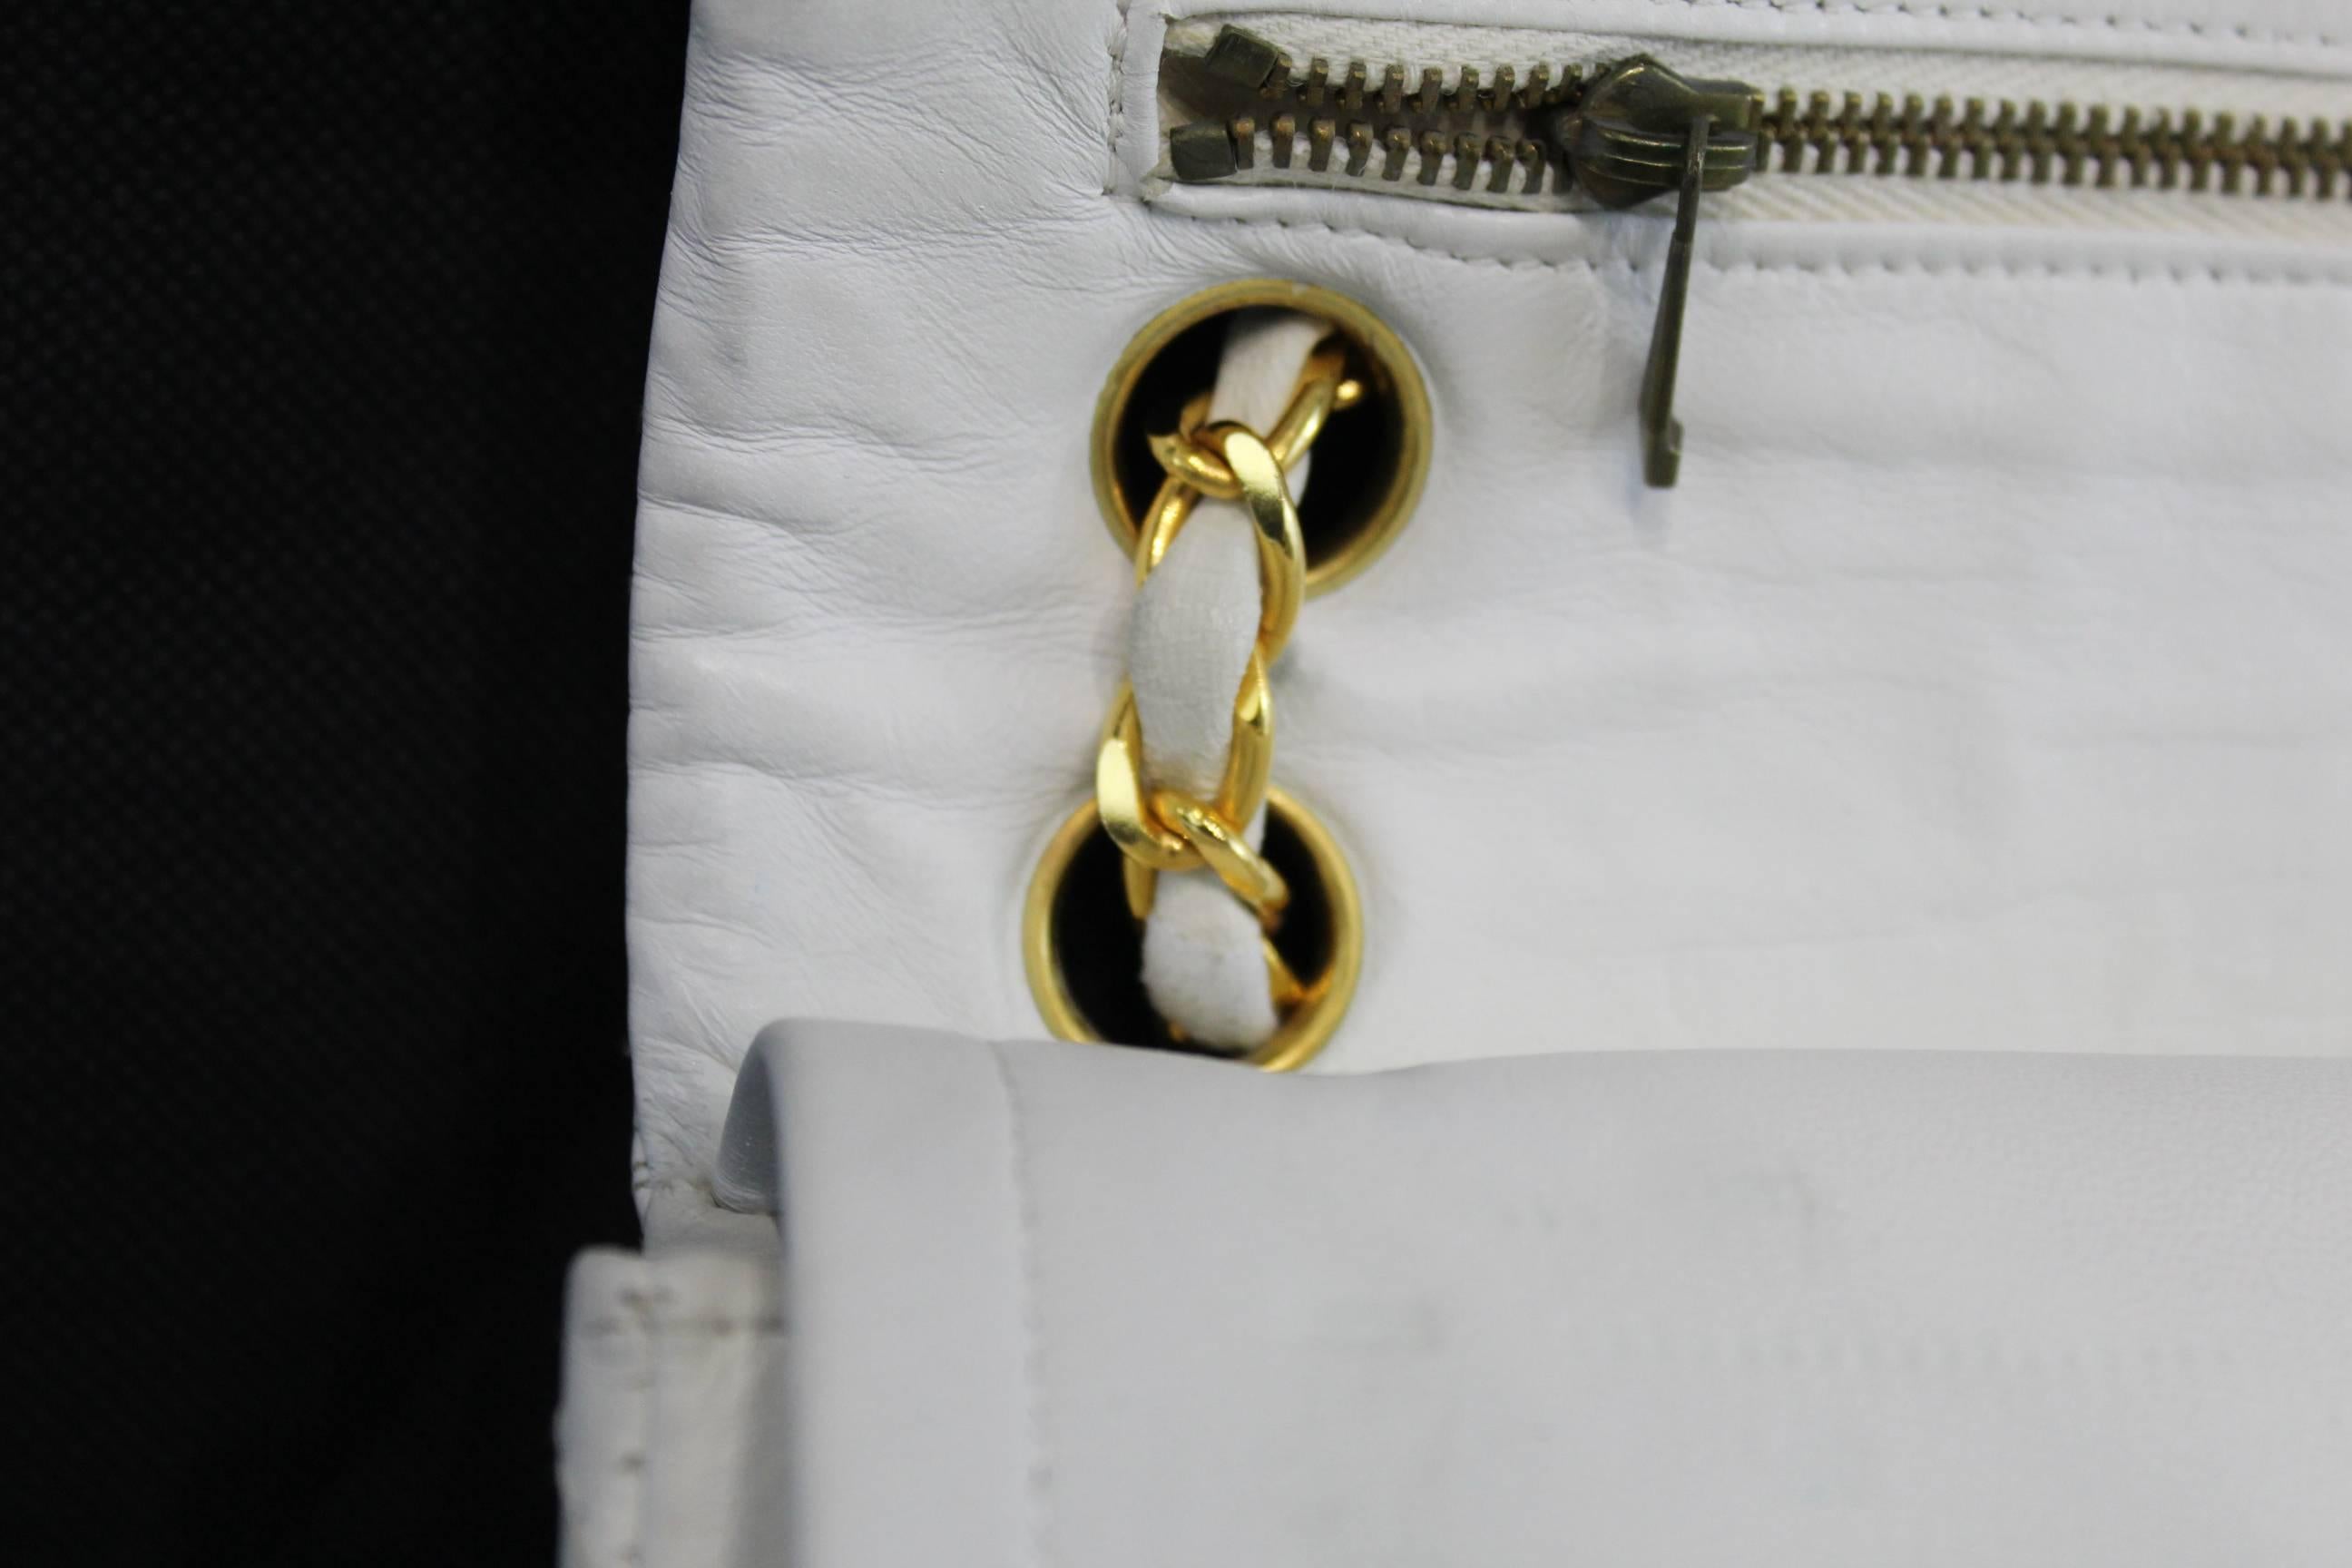 Vintage 80's Chanel 2.55 Bag in White Letaher and Golden Hardware. size 10